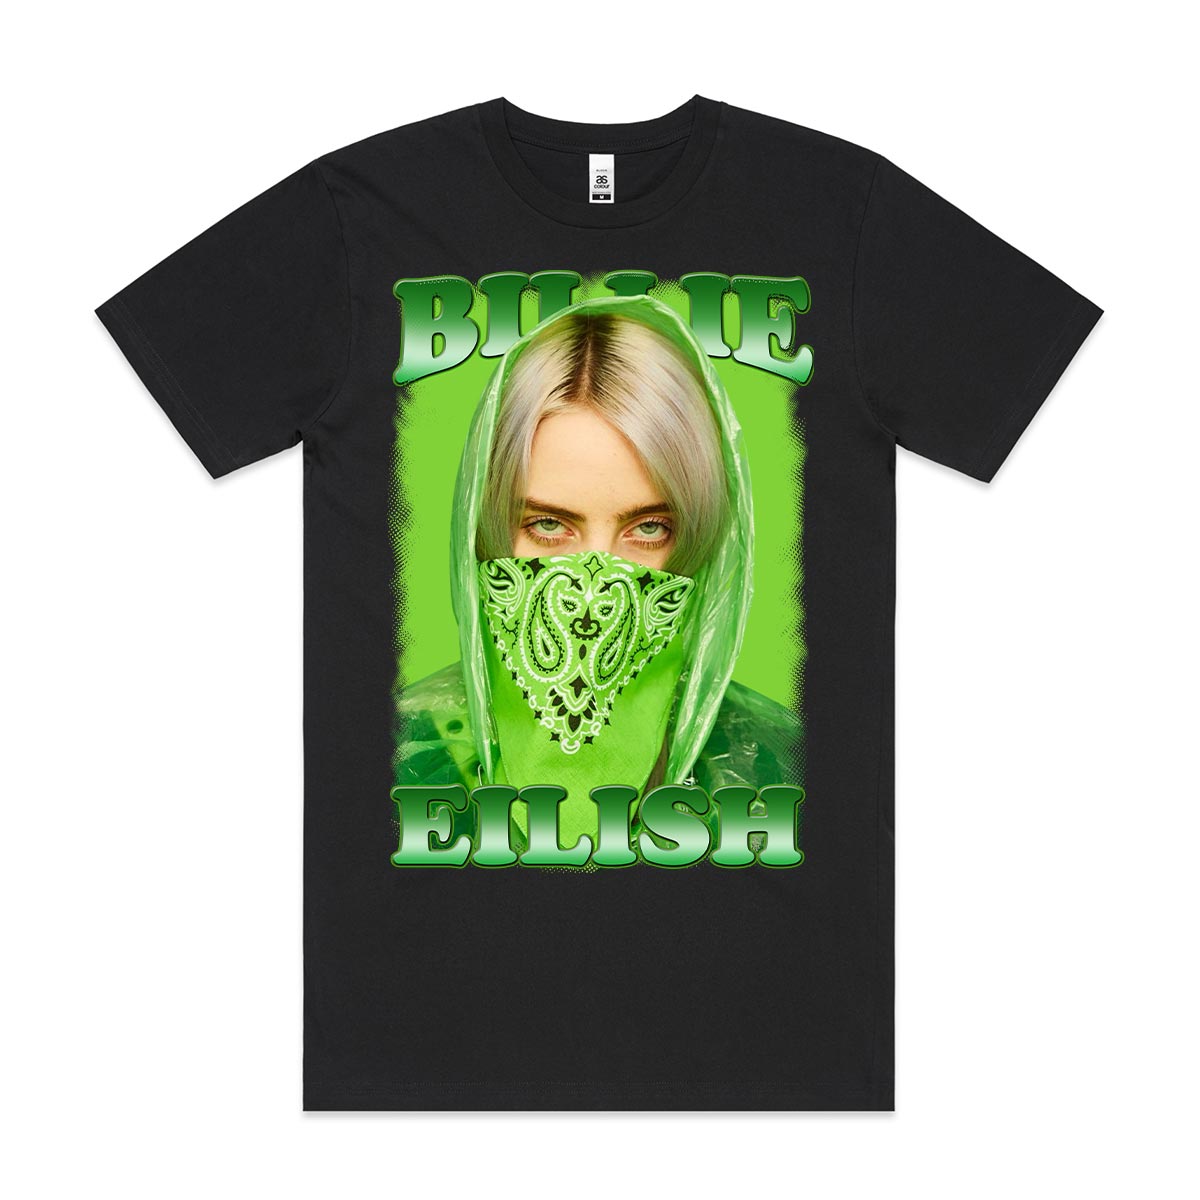 Billie Eilish 09 T-Shirt Artist Family Fan Music Pop Culture